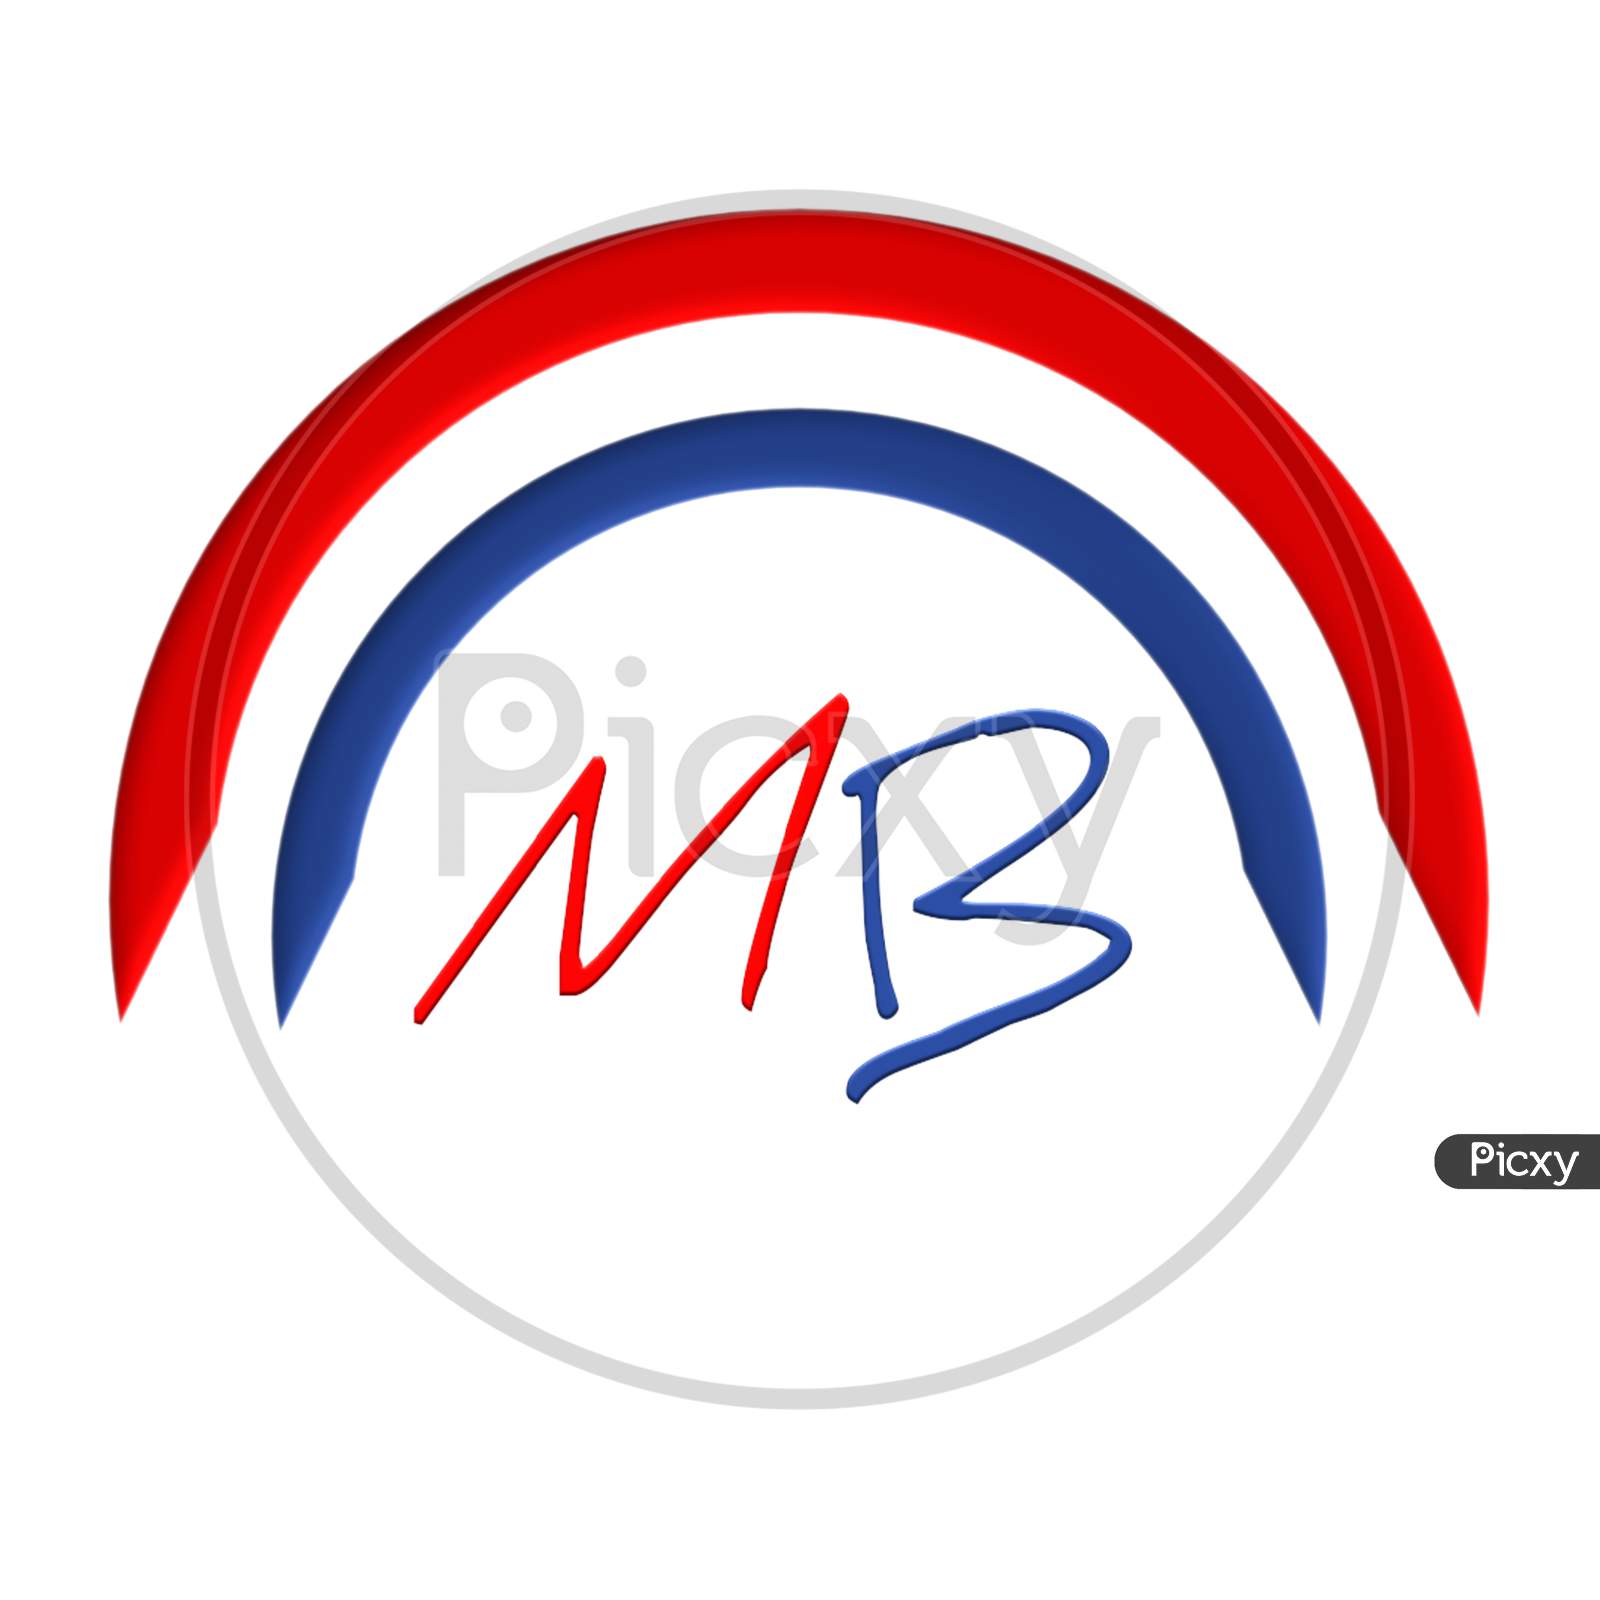 Image of Mg logo design on background-PO559461-Picxy